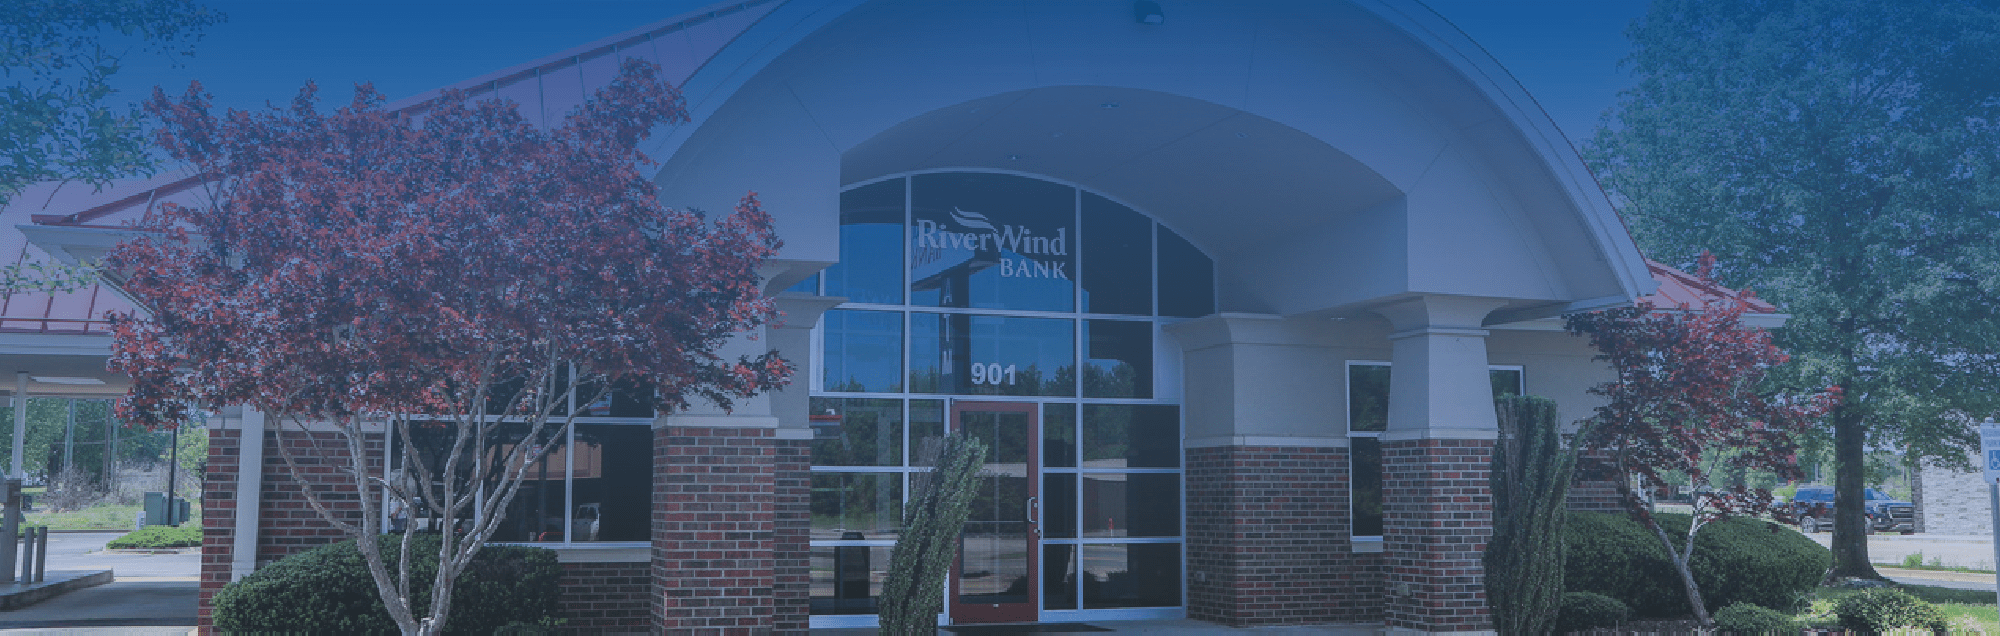 Riverwind Bank Entrance